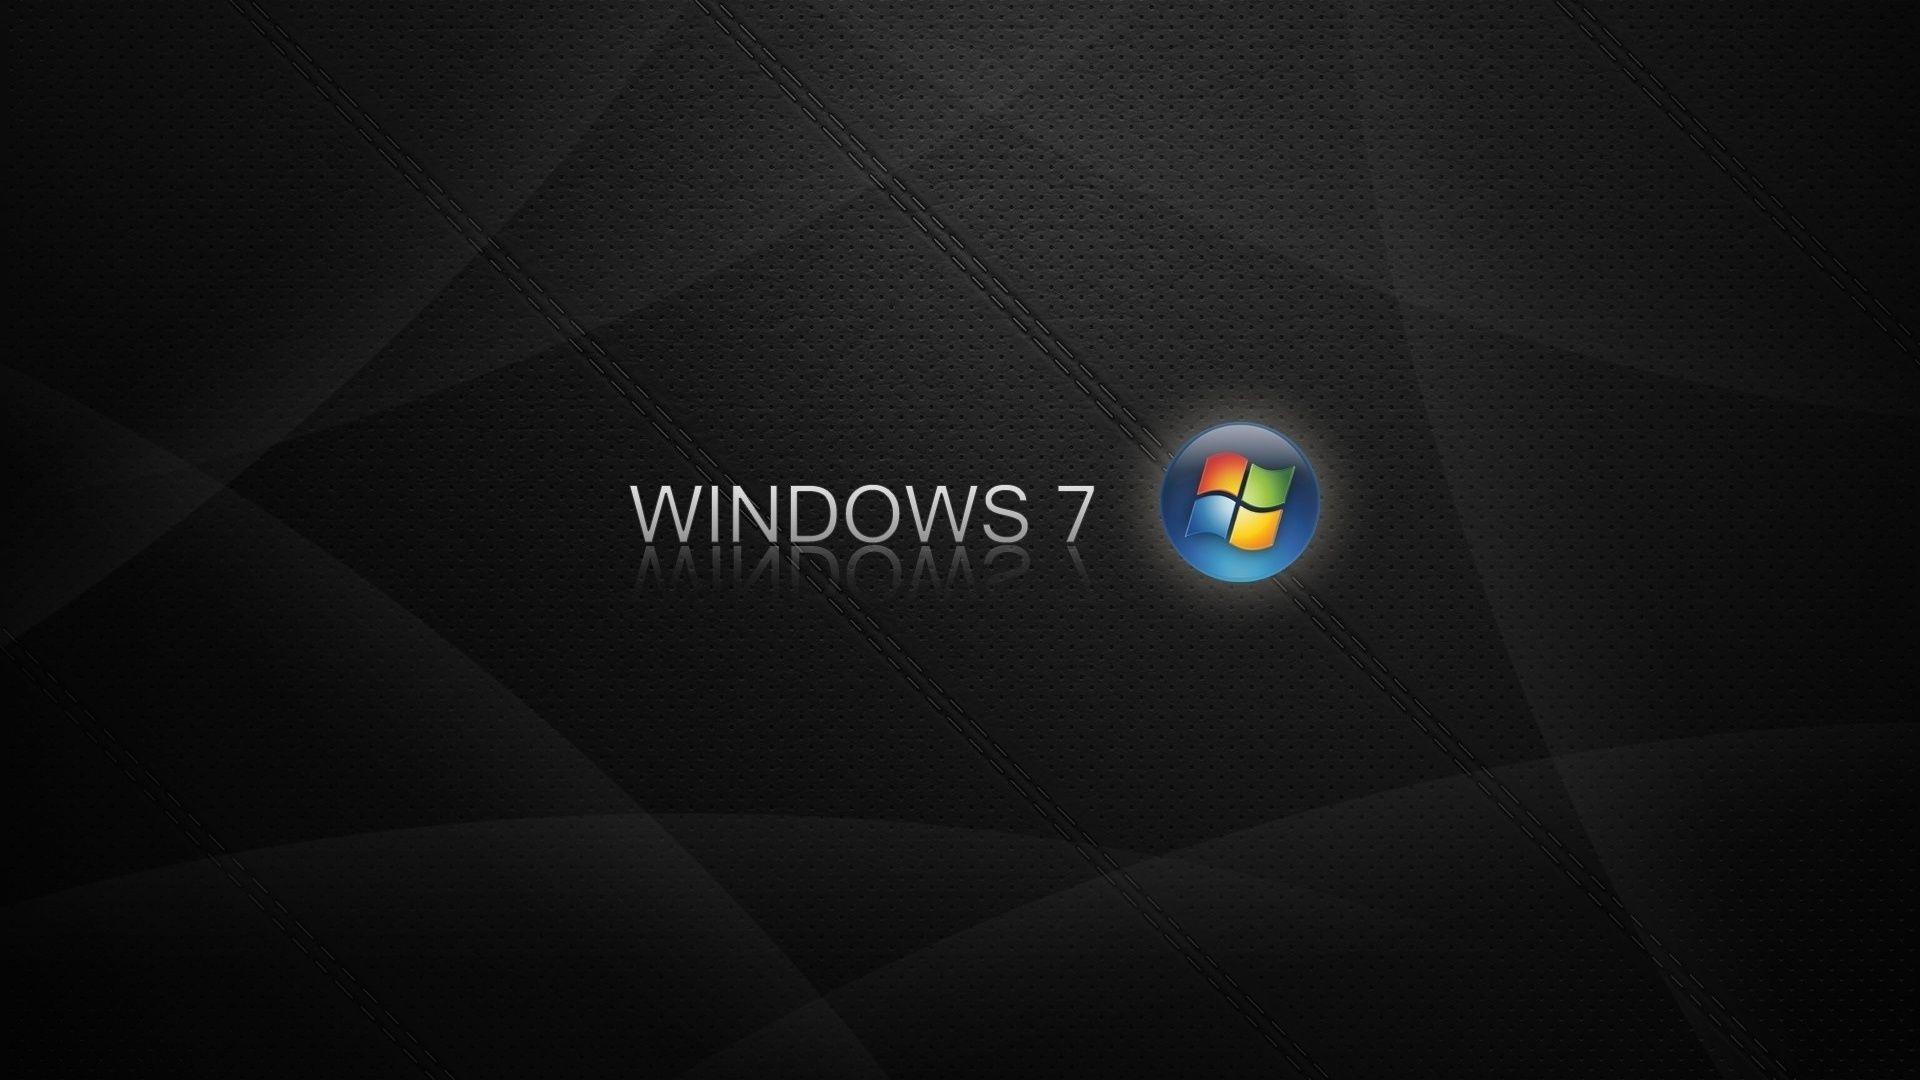 Windows 7 desktop PC and Mac wallpaper